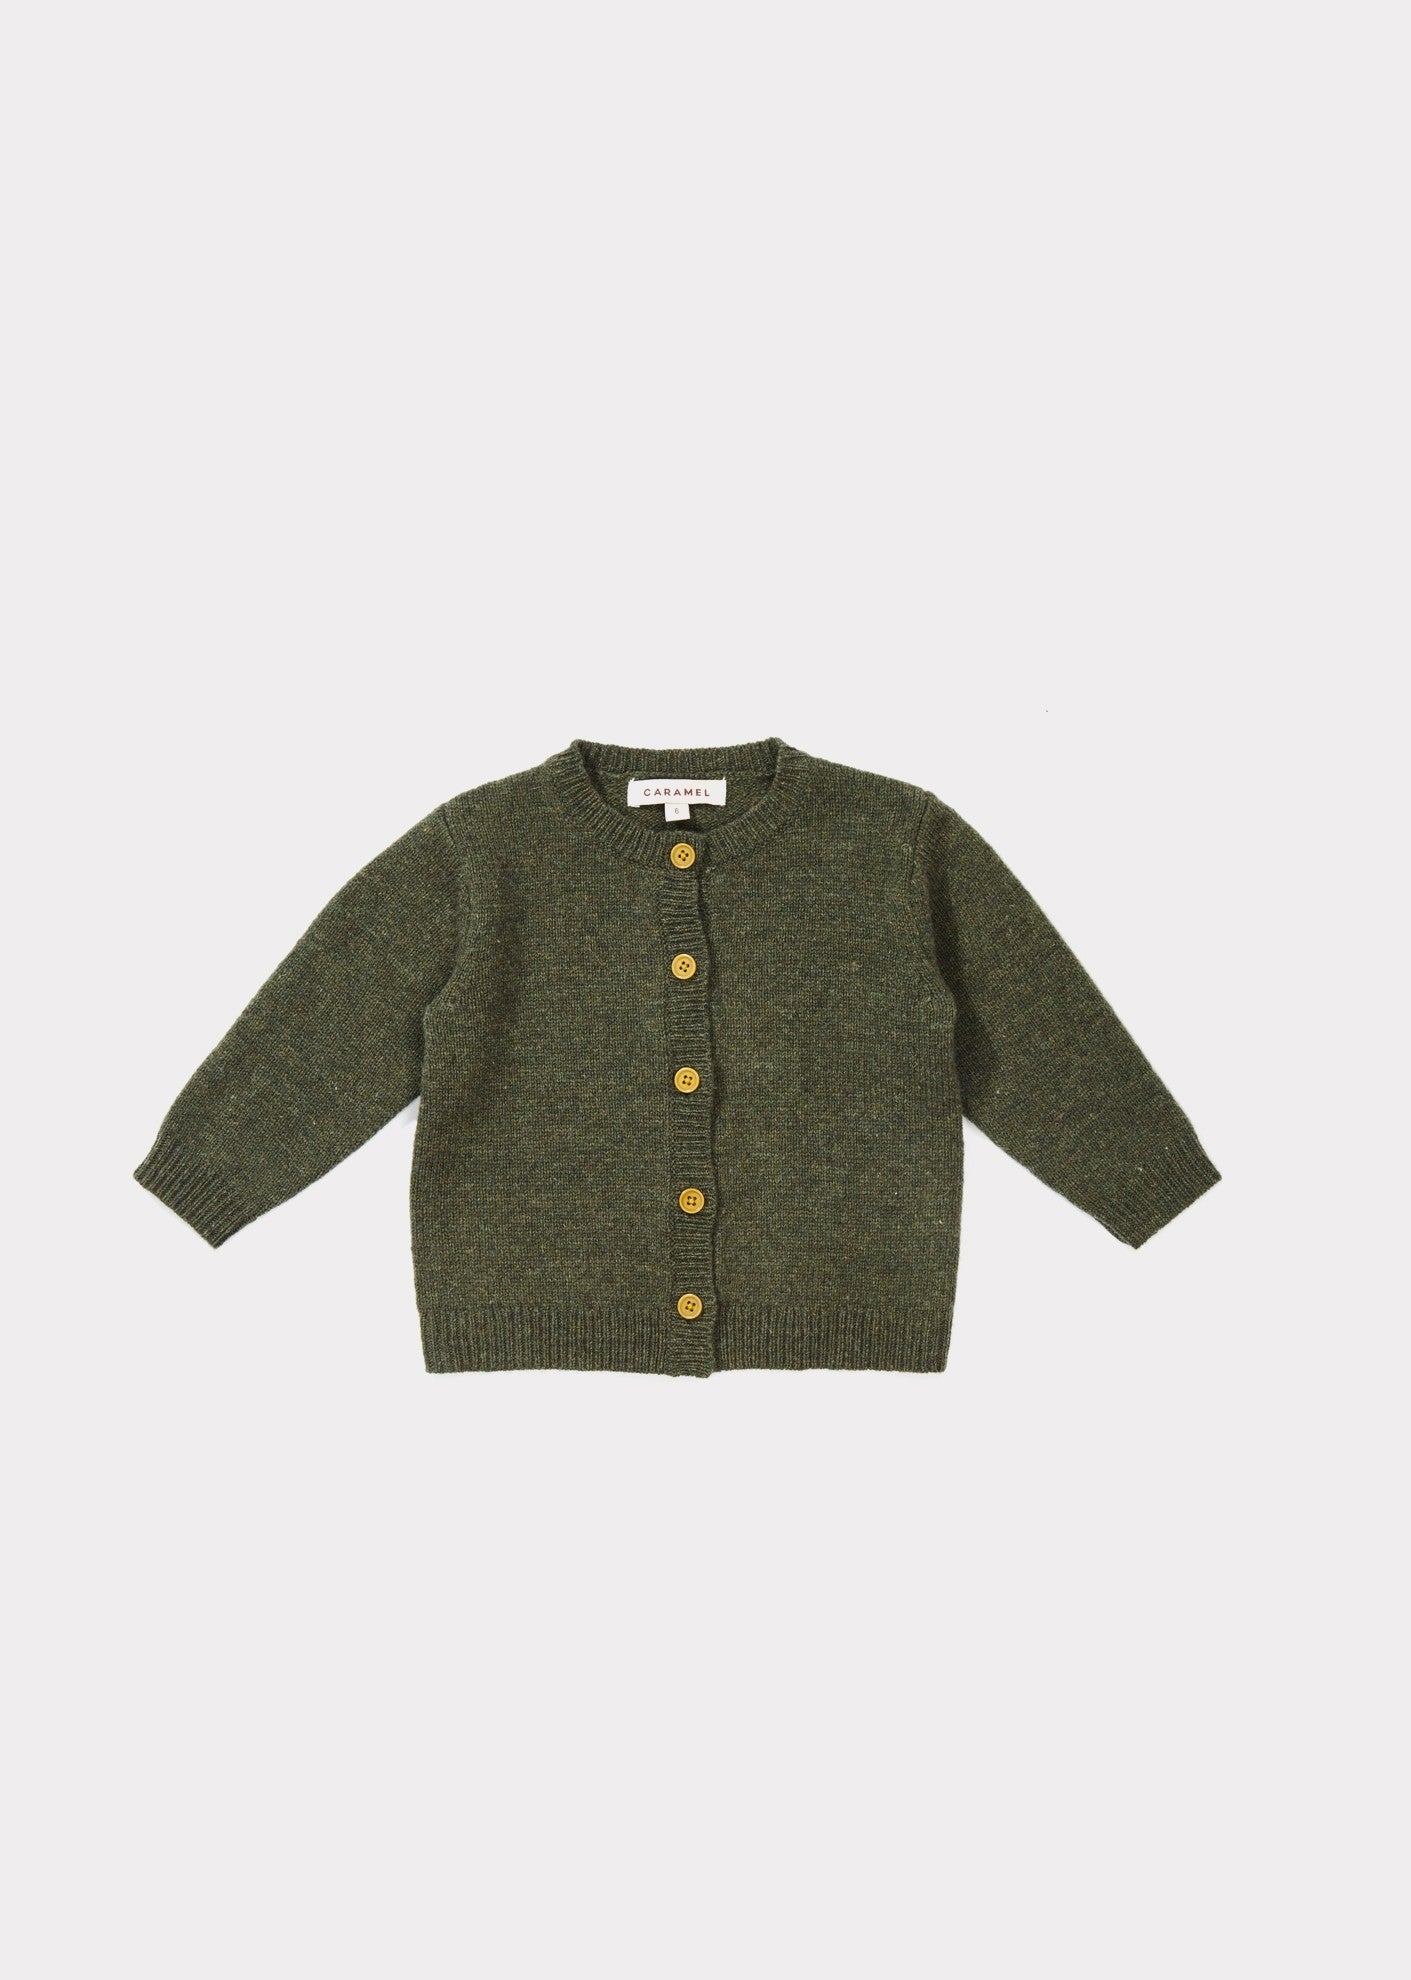 Baby Green Sweater